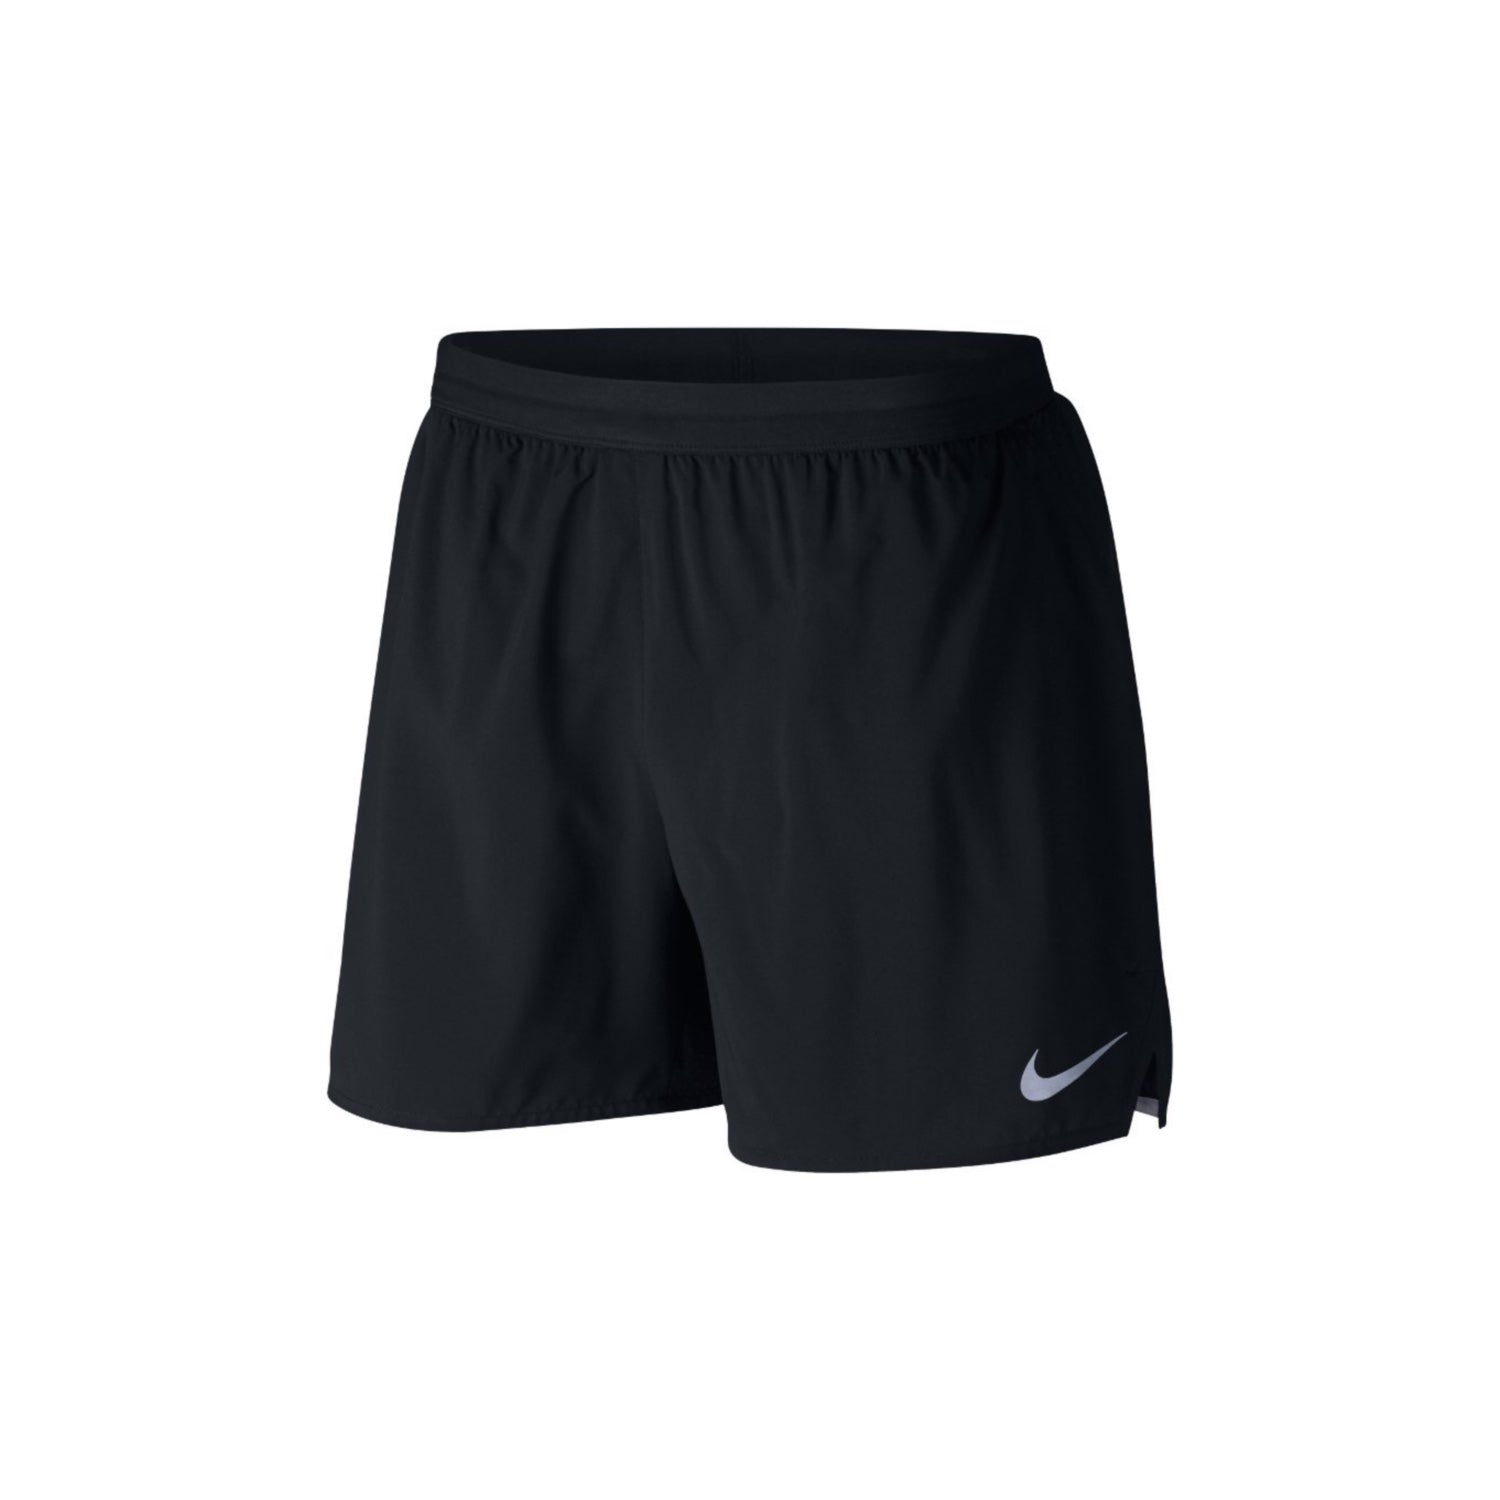 Nike flex stride shorts